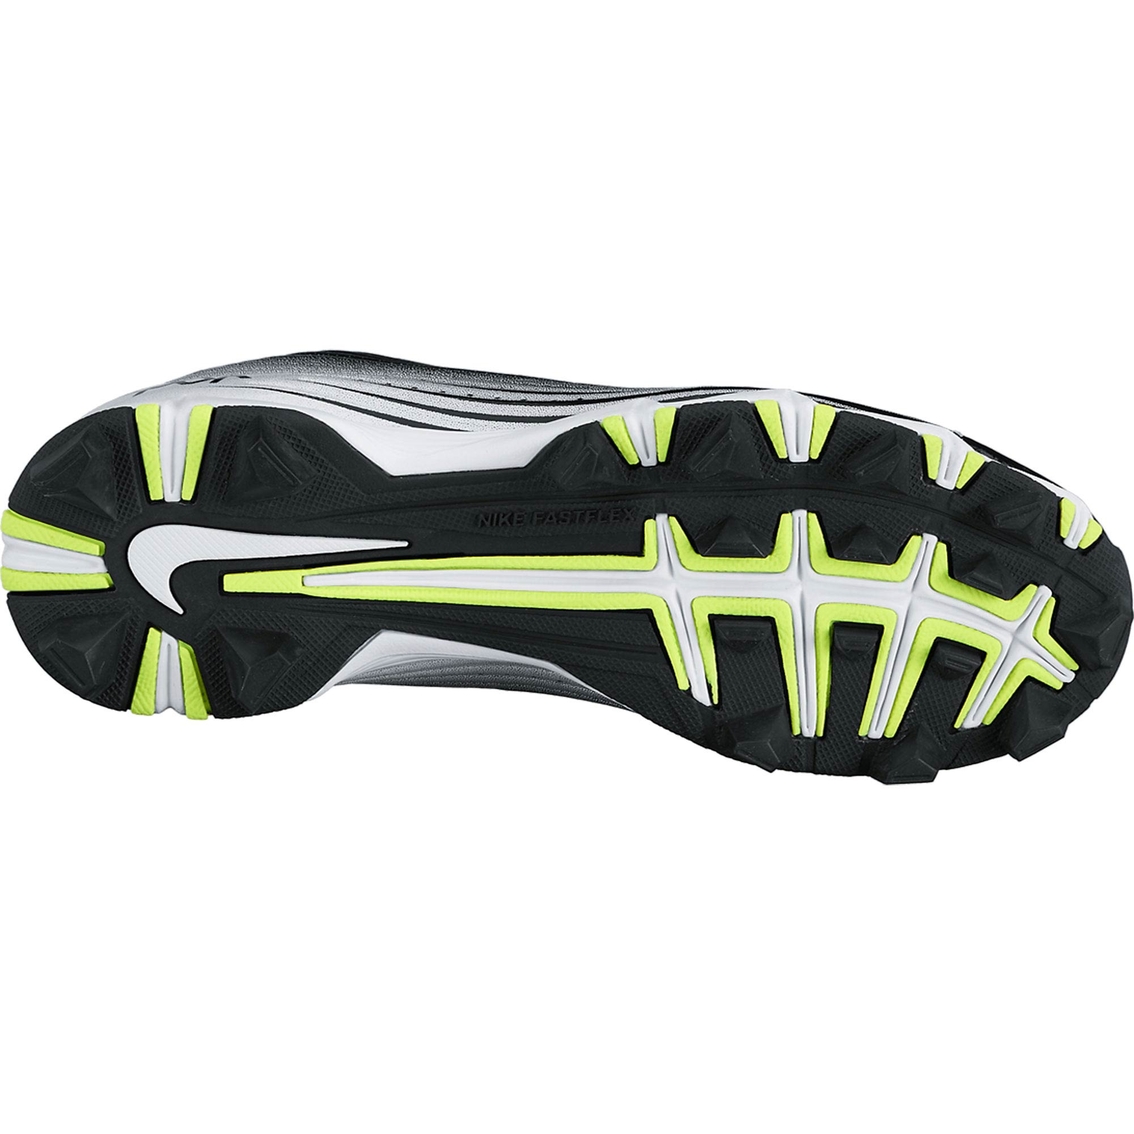 Nike Men's Vapor Keystone 2 Low Baseball Cleats - Image 2 of 2